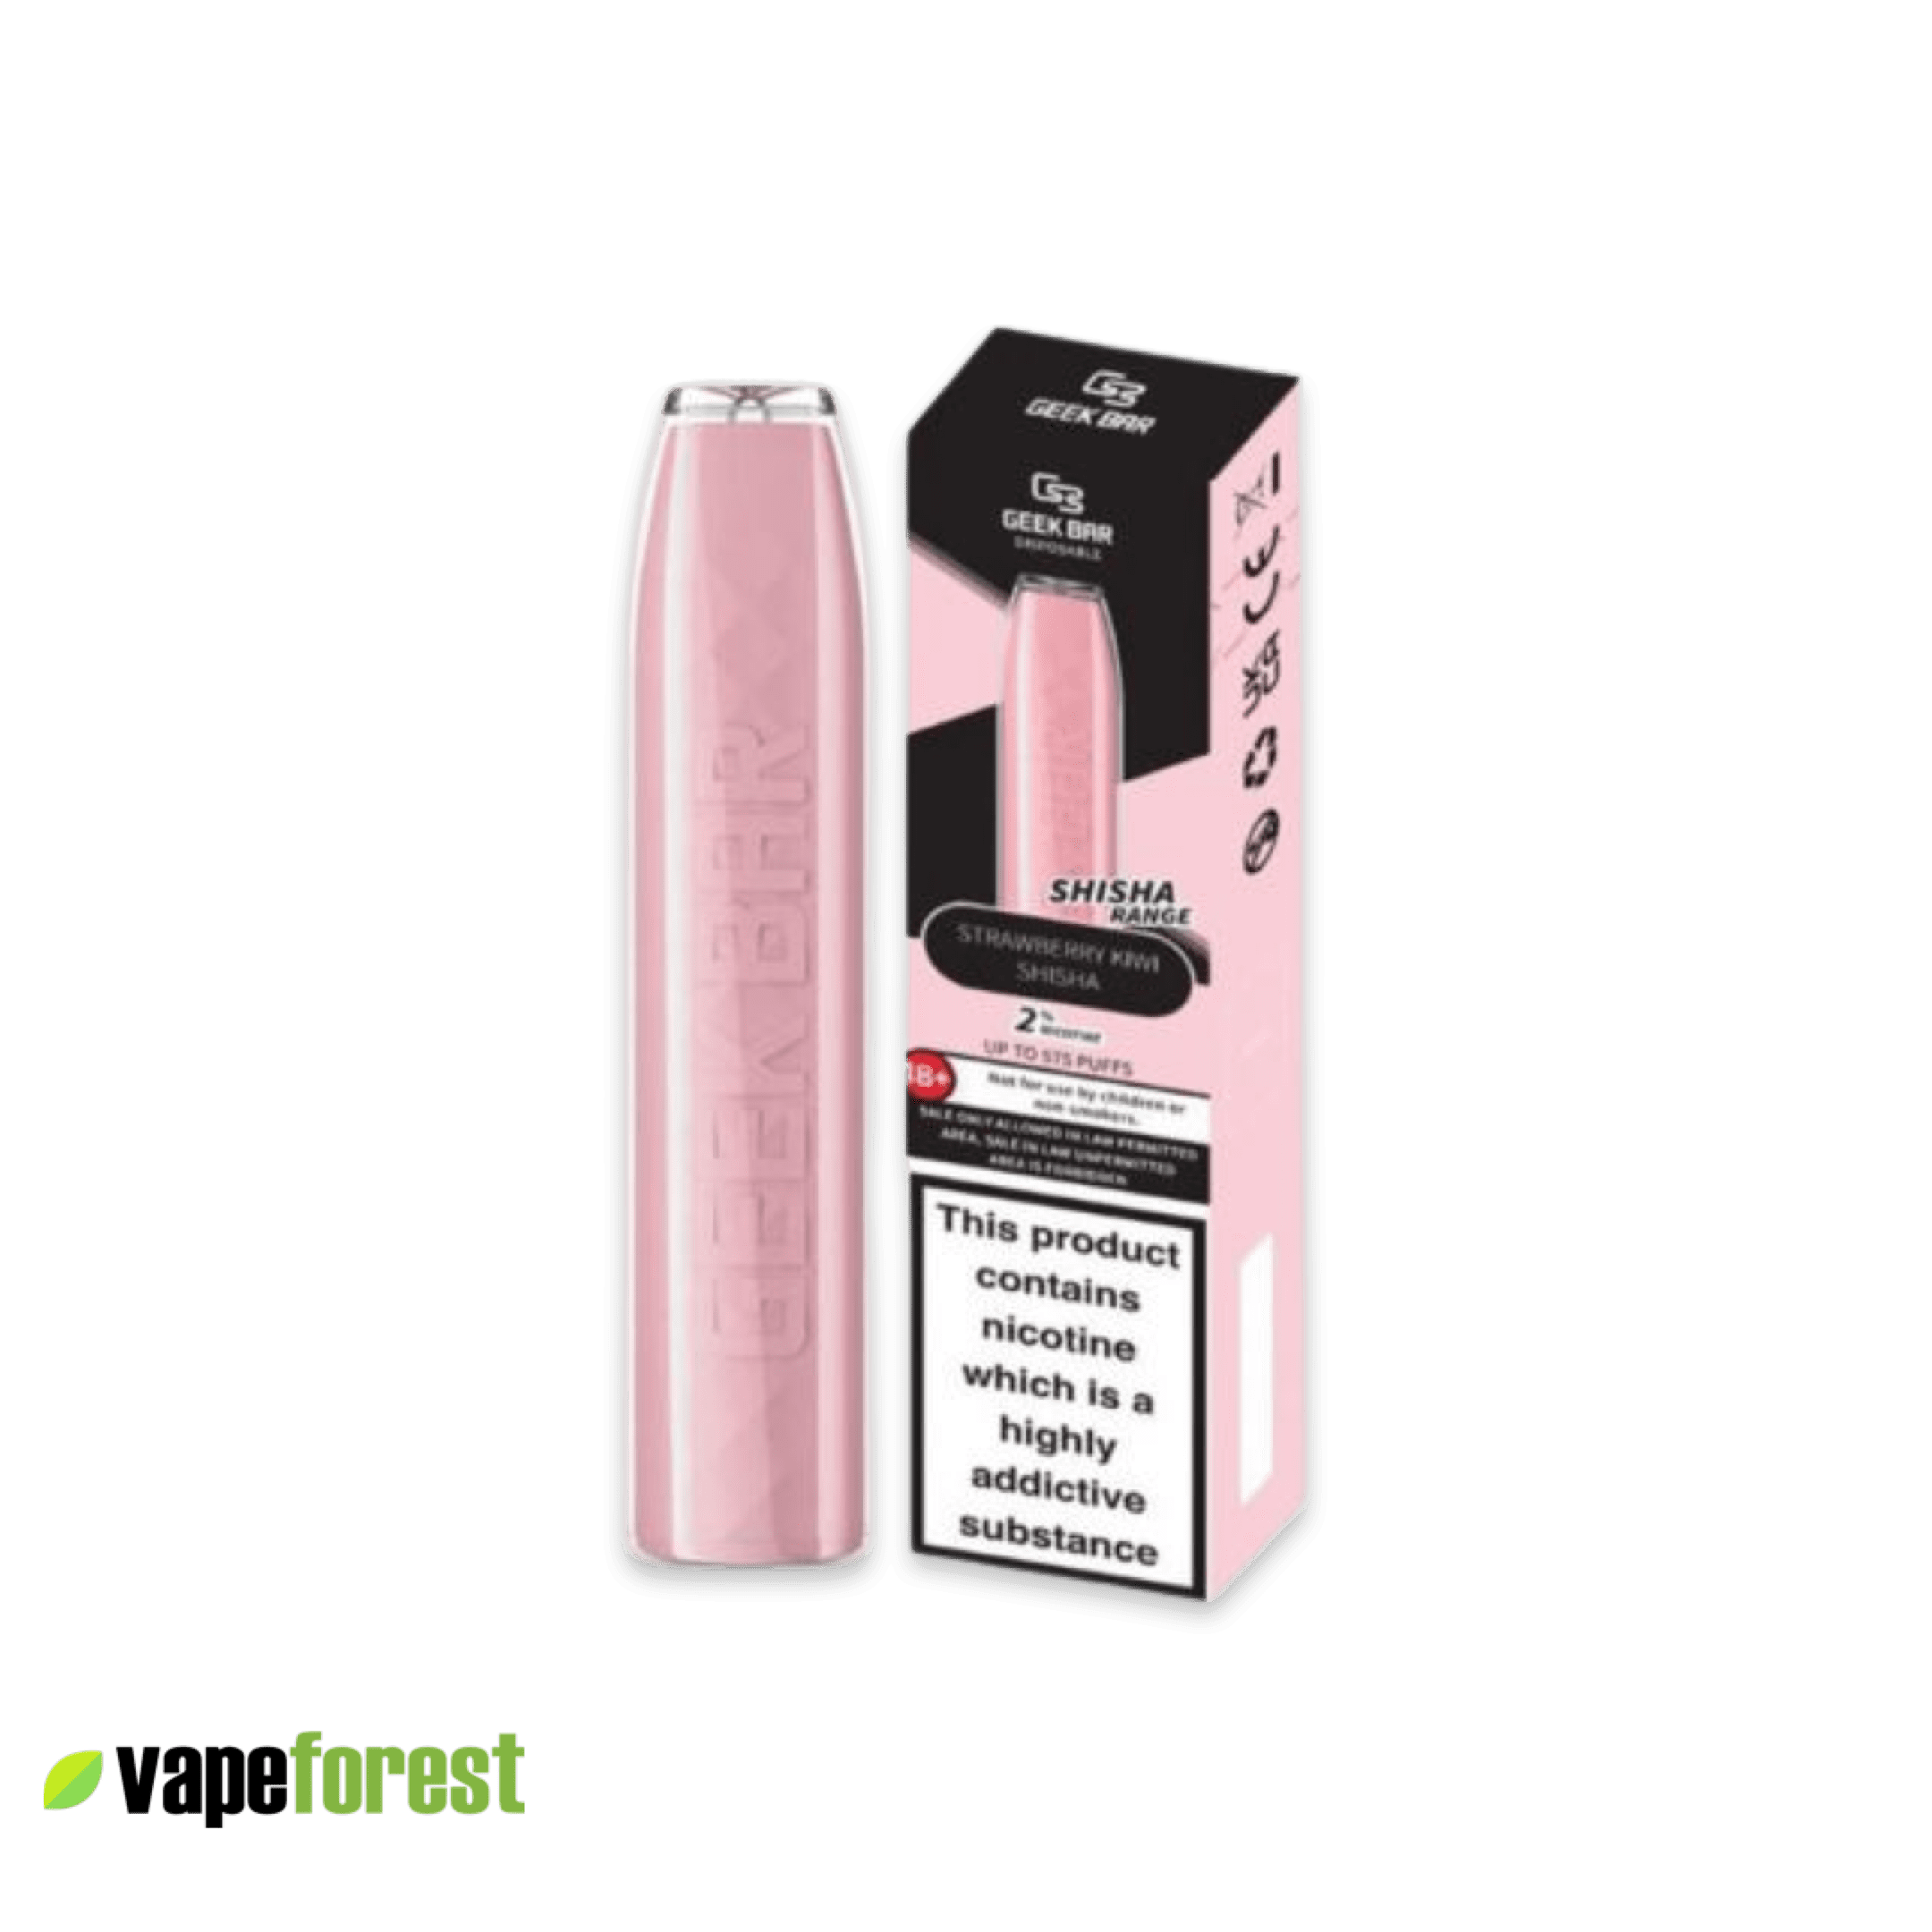 Geek Bar Shisha Range - Strawberry Kiwi Flavour